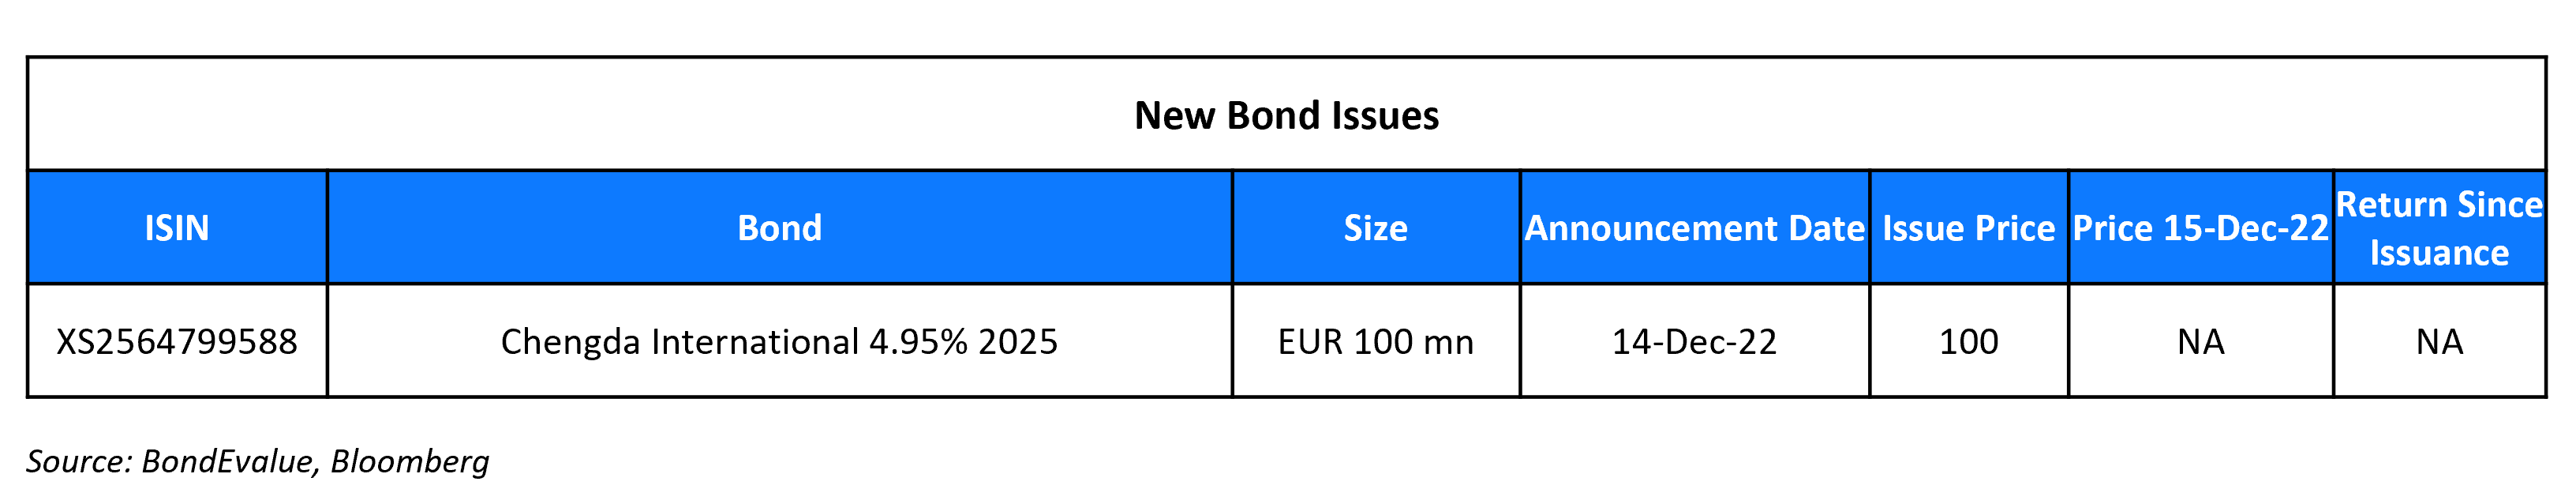 New Bond Issues 15 Dec 22